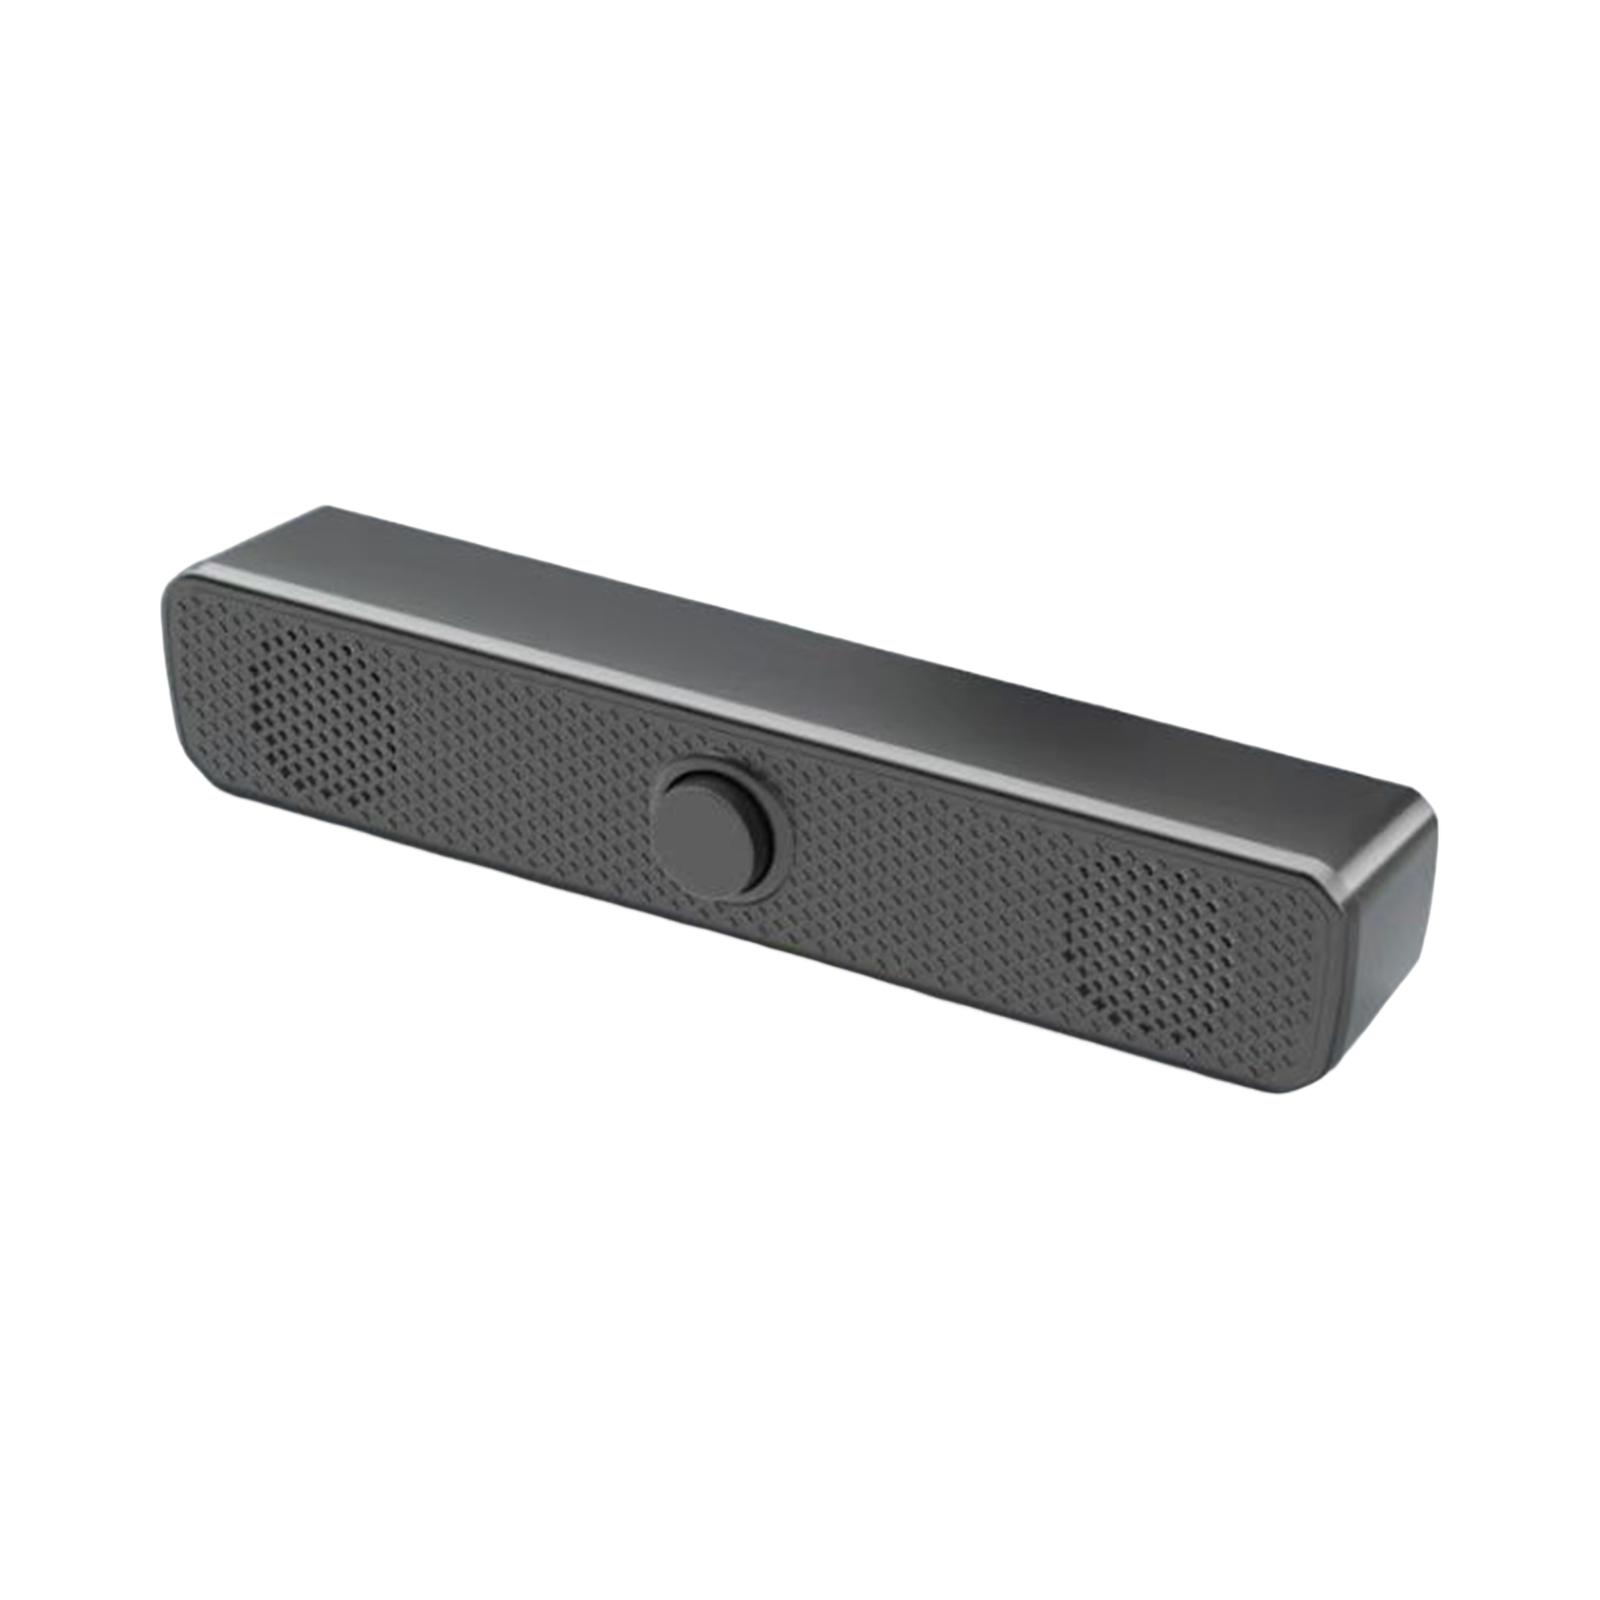 PC Gaming Speakers HiFi Sound Computer Sound Bar for Desktop Notebook Phones - image 1 of 8